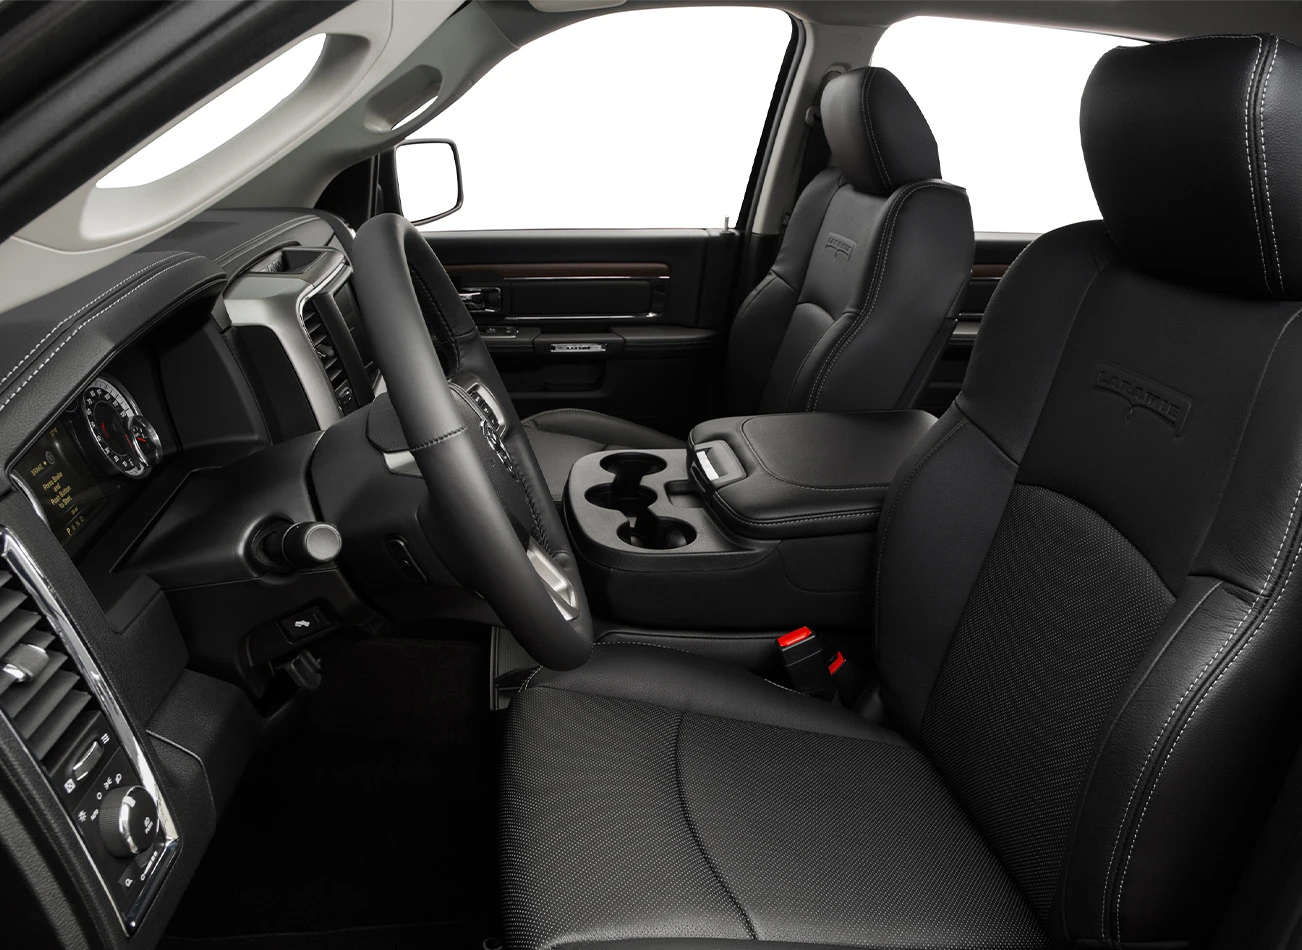 2015 RAM 1500: Inside of cab | CarMax